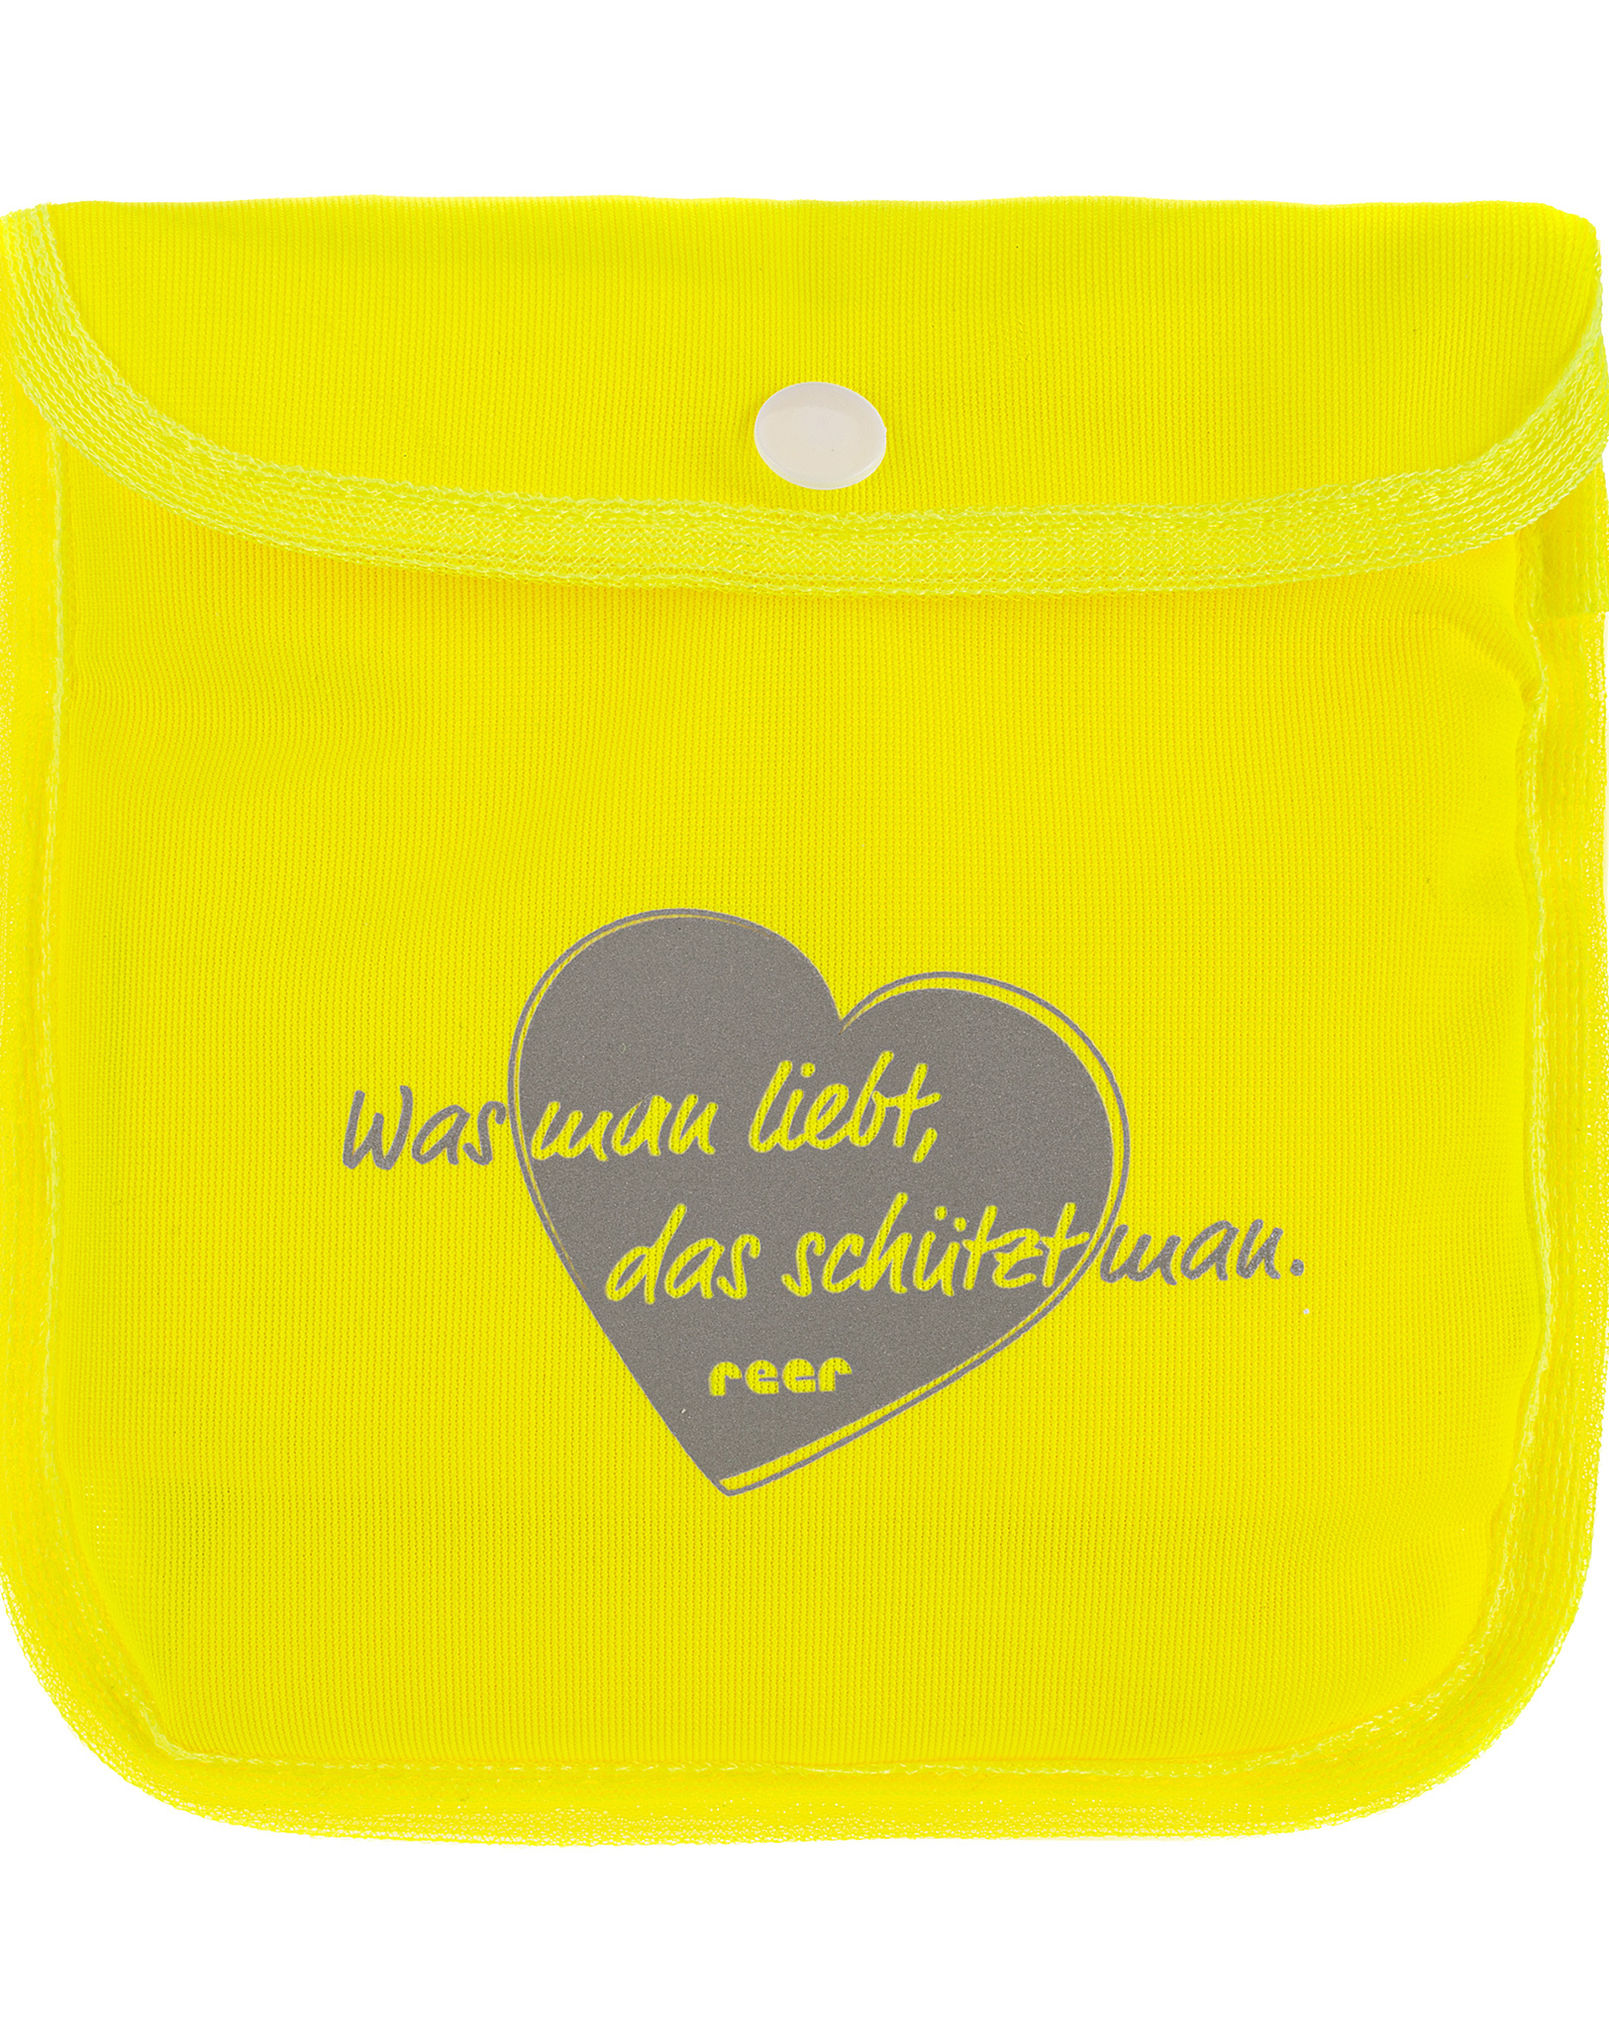 Kinder-Warnweste MY BUDDY GUARD in gelb bestellen | Weltbild.de